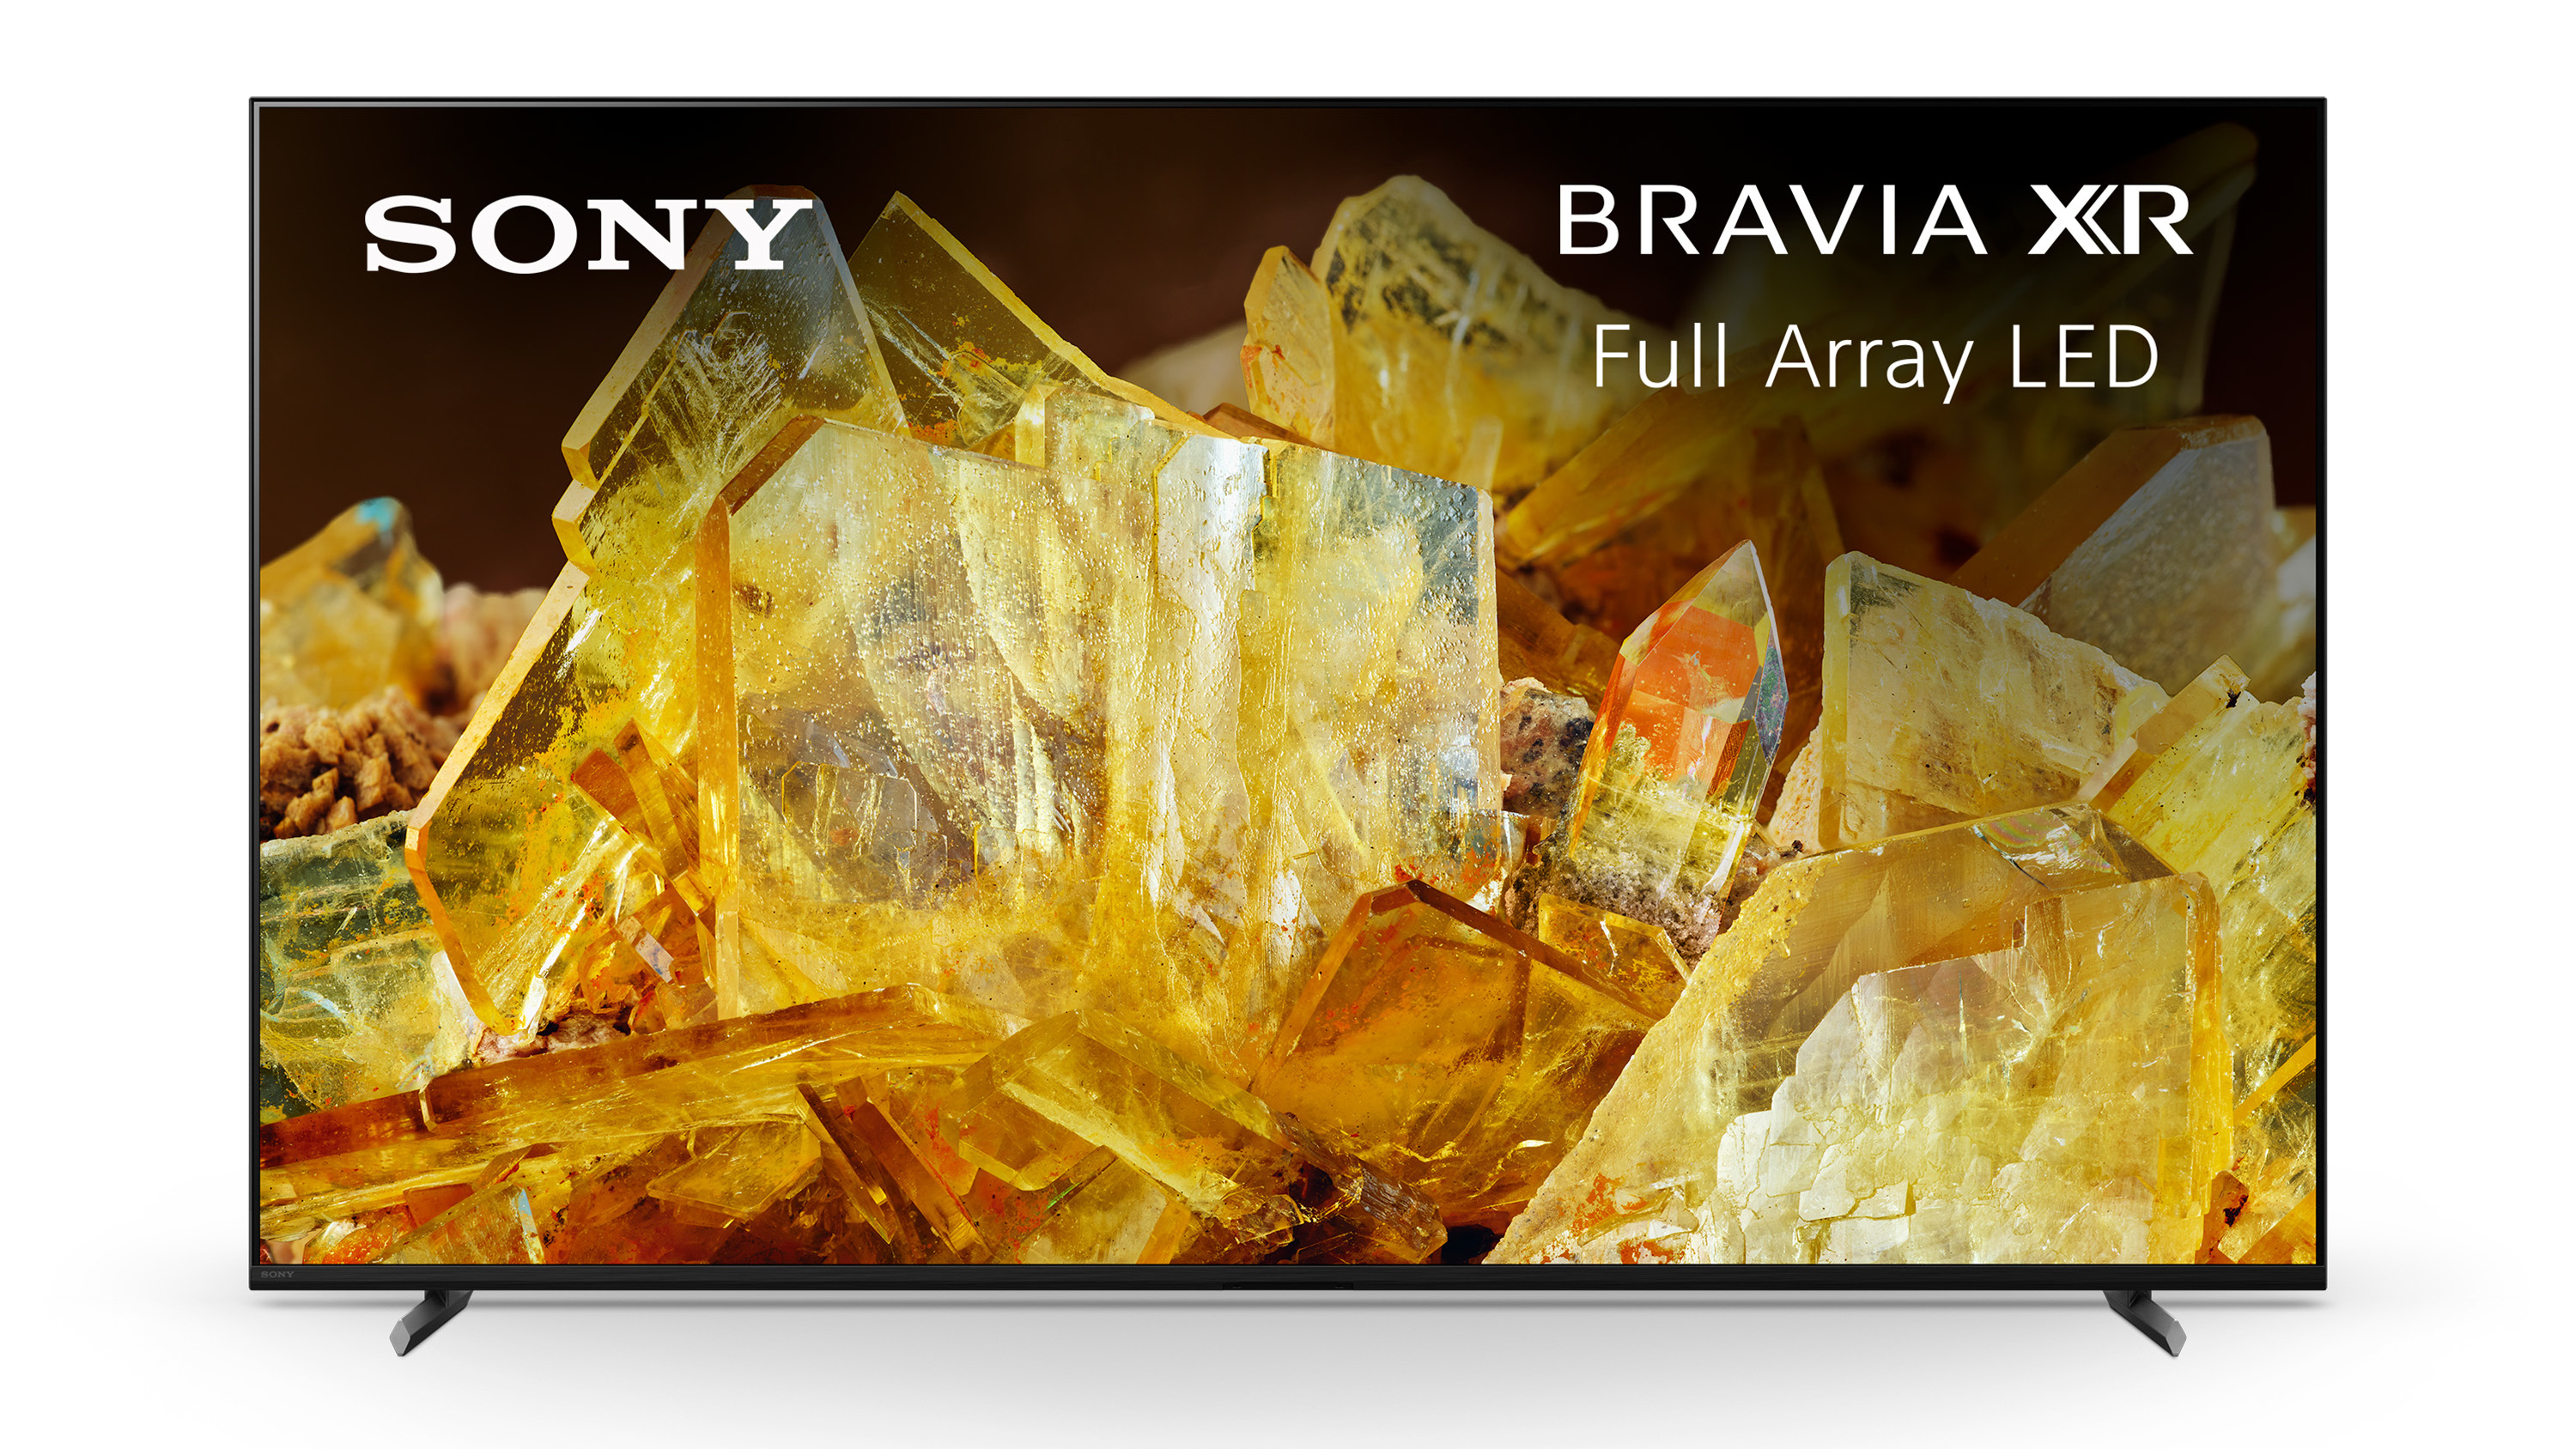 El televisor Sony X90L Full Array LED-LCD sobre fondo blanco